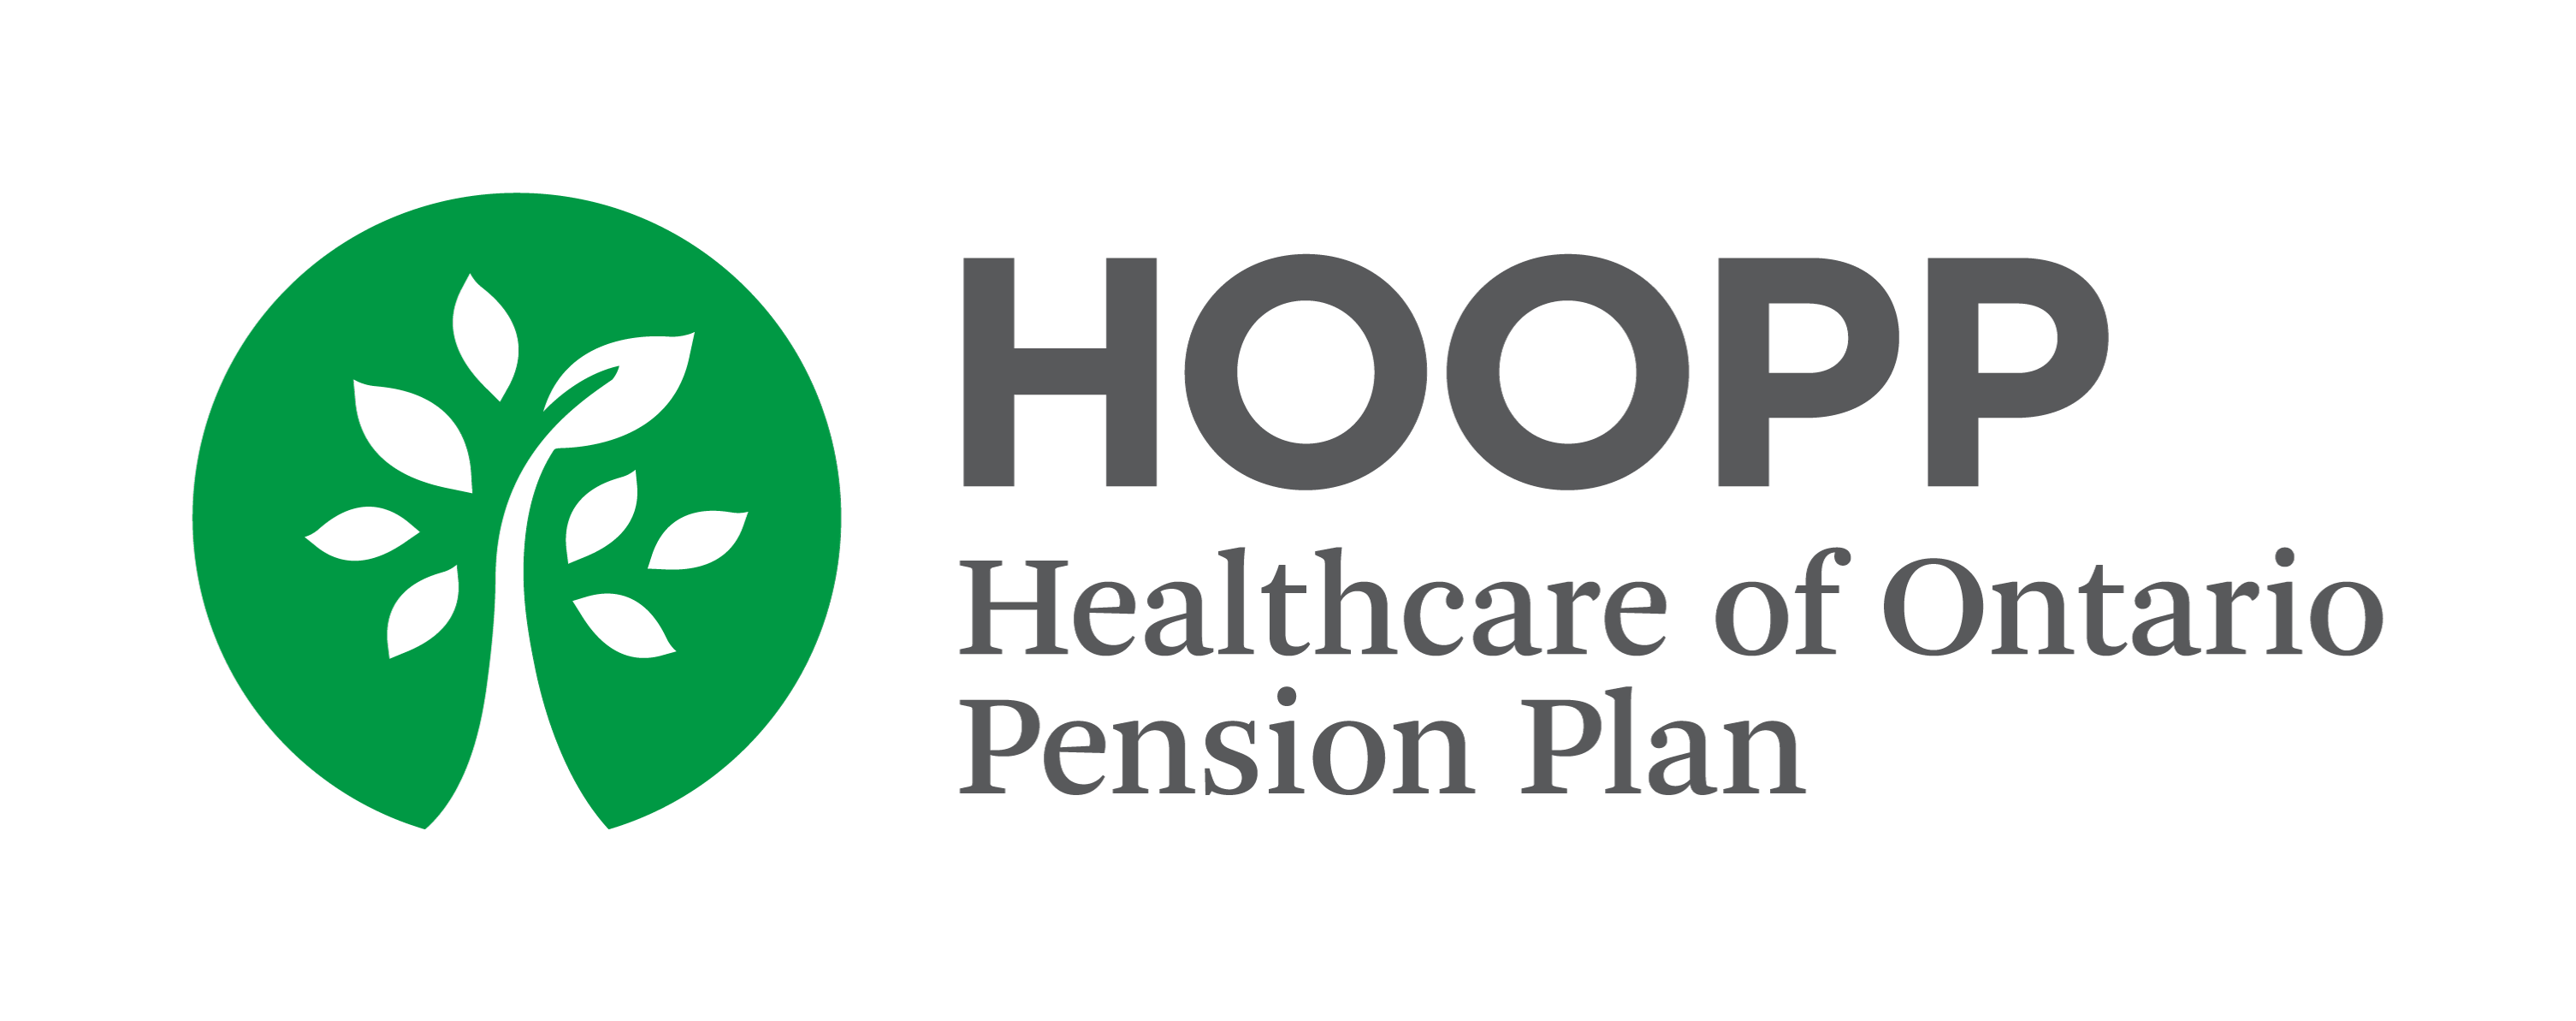 Healthcare of Ontario Pension Plan logo